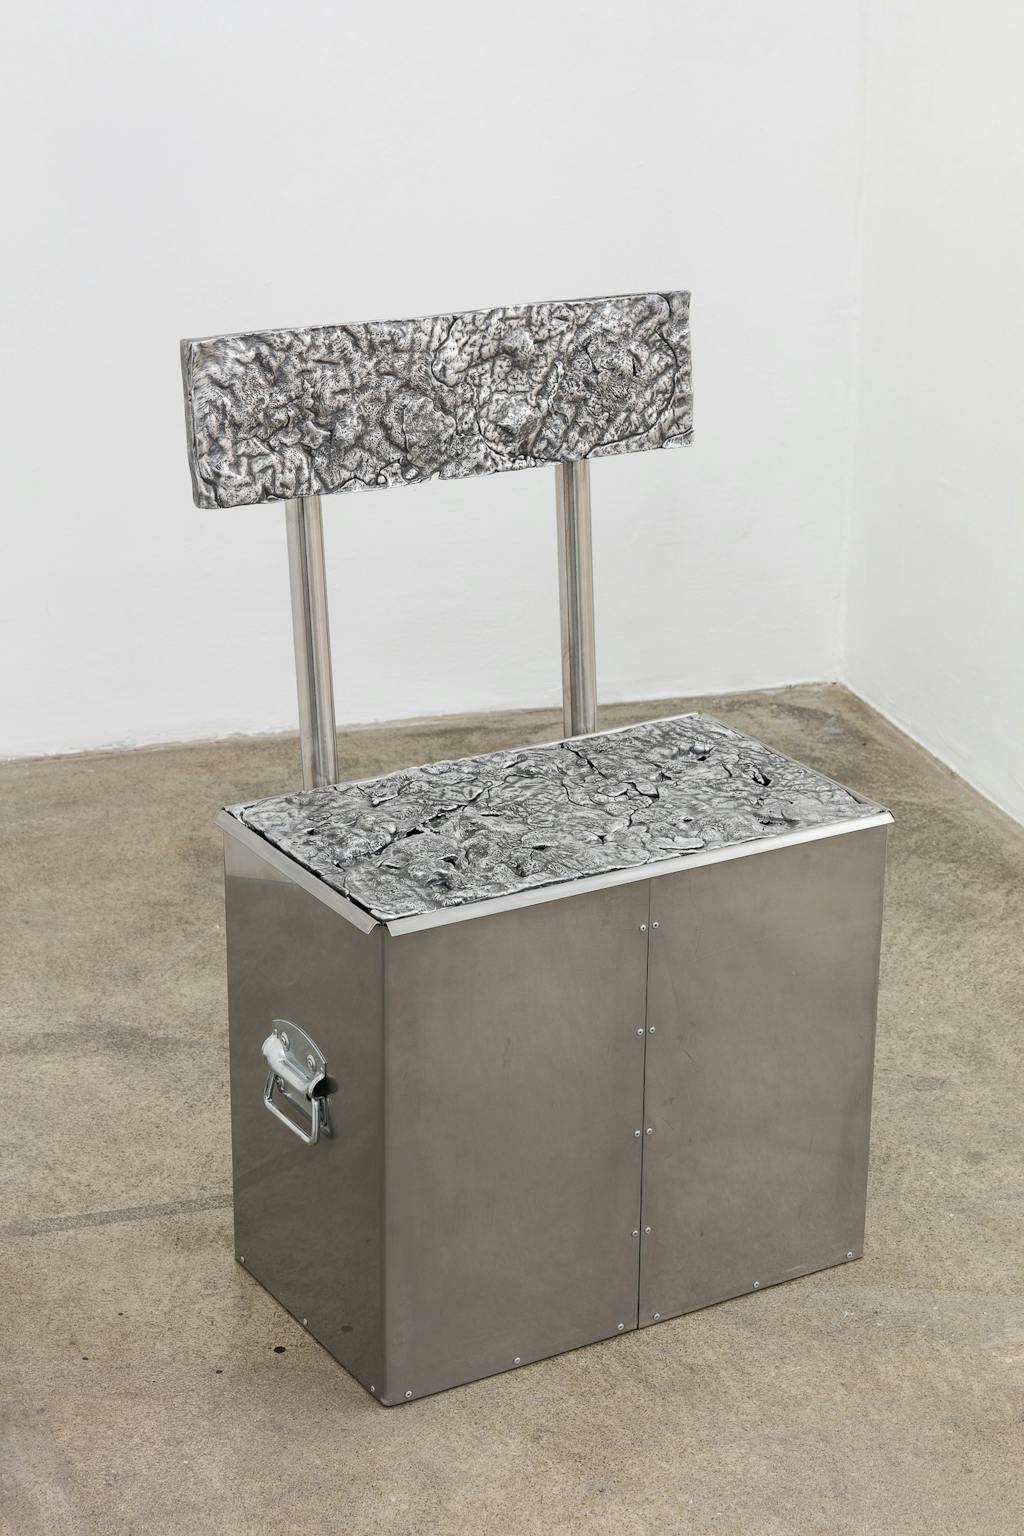 Irina Lotarevich, *Skin Seat Single*, 2020, cast and polished aluminium, stainless steel, hardware, 87 x 52 x 35,5 cm - Â© Paris Internationale